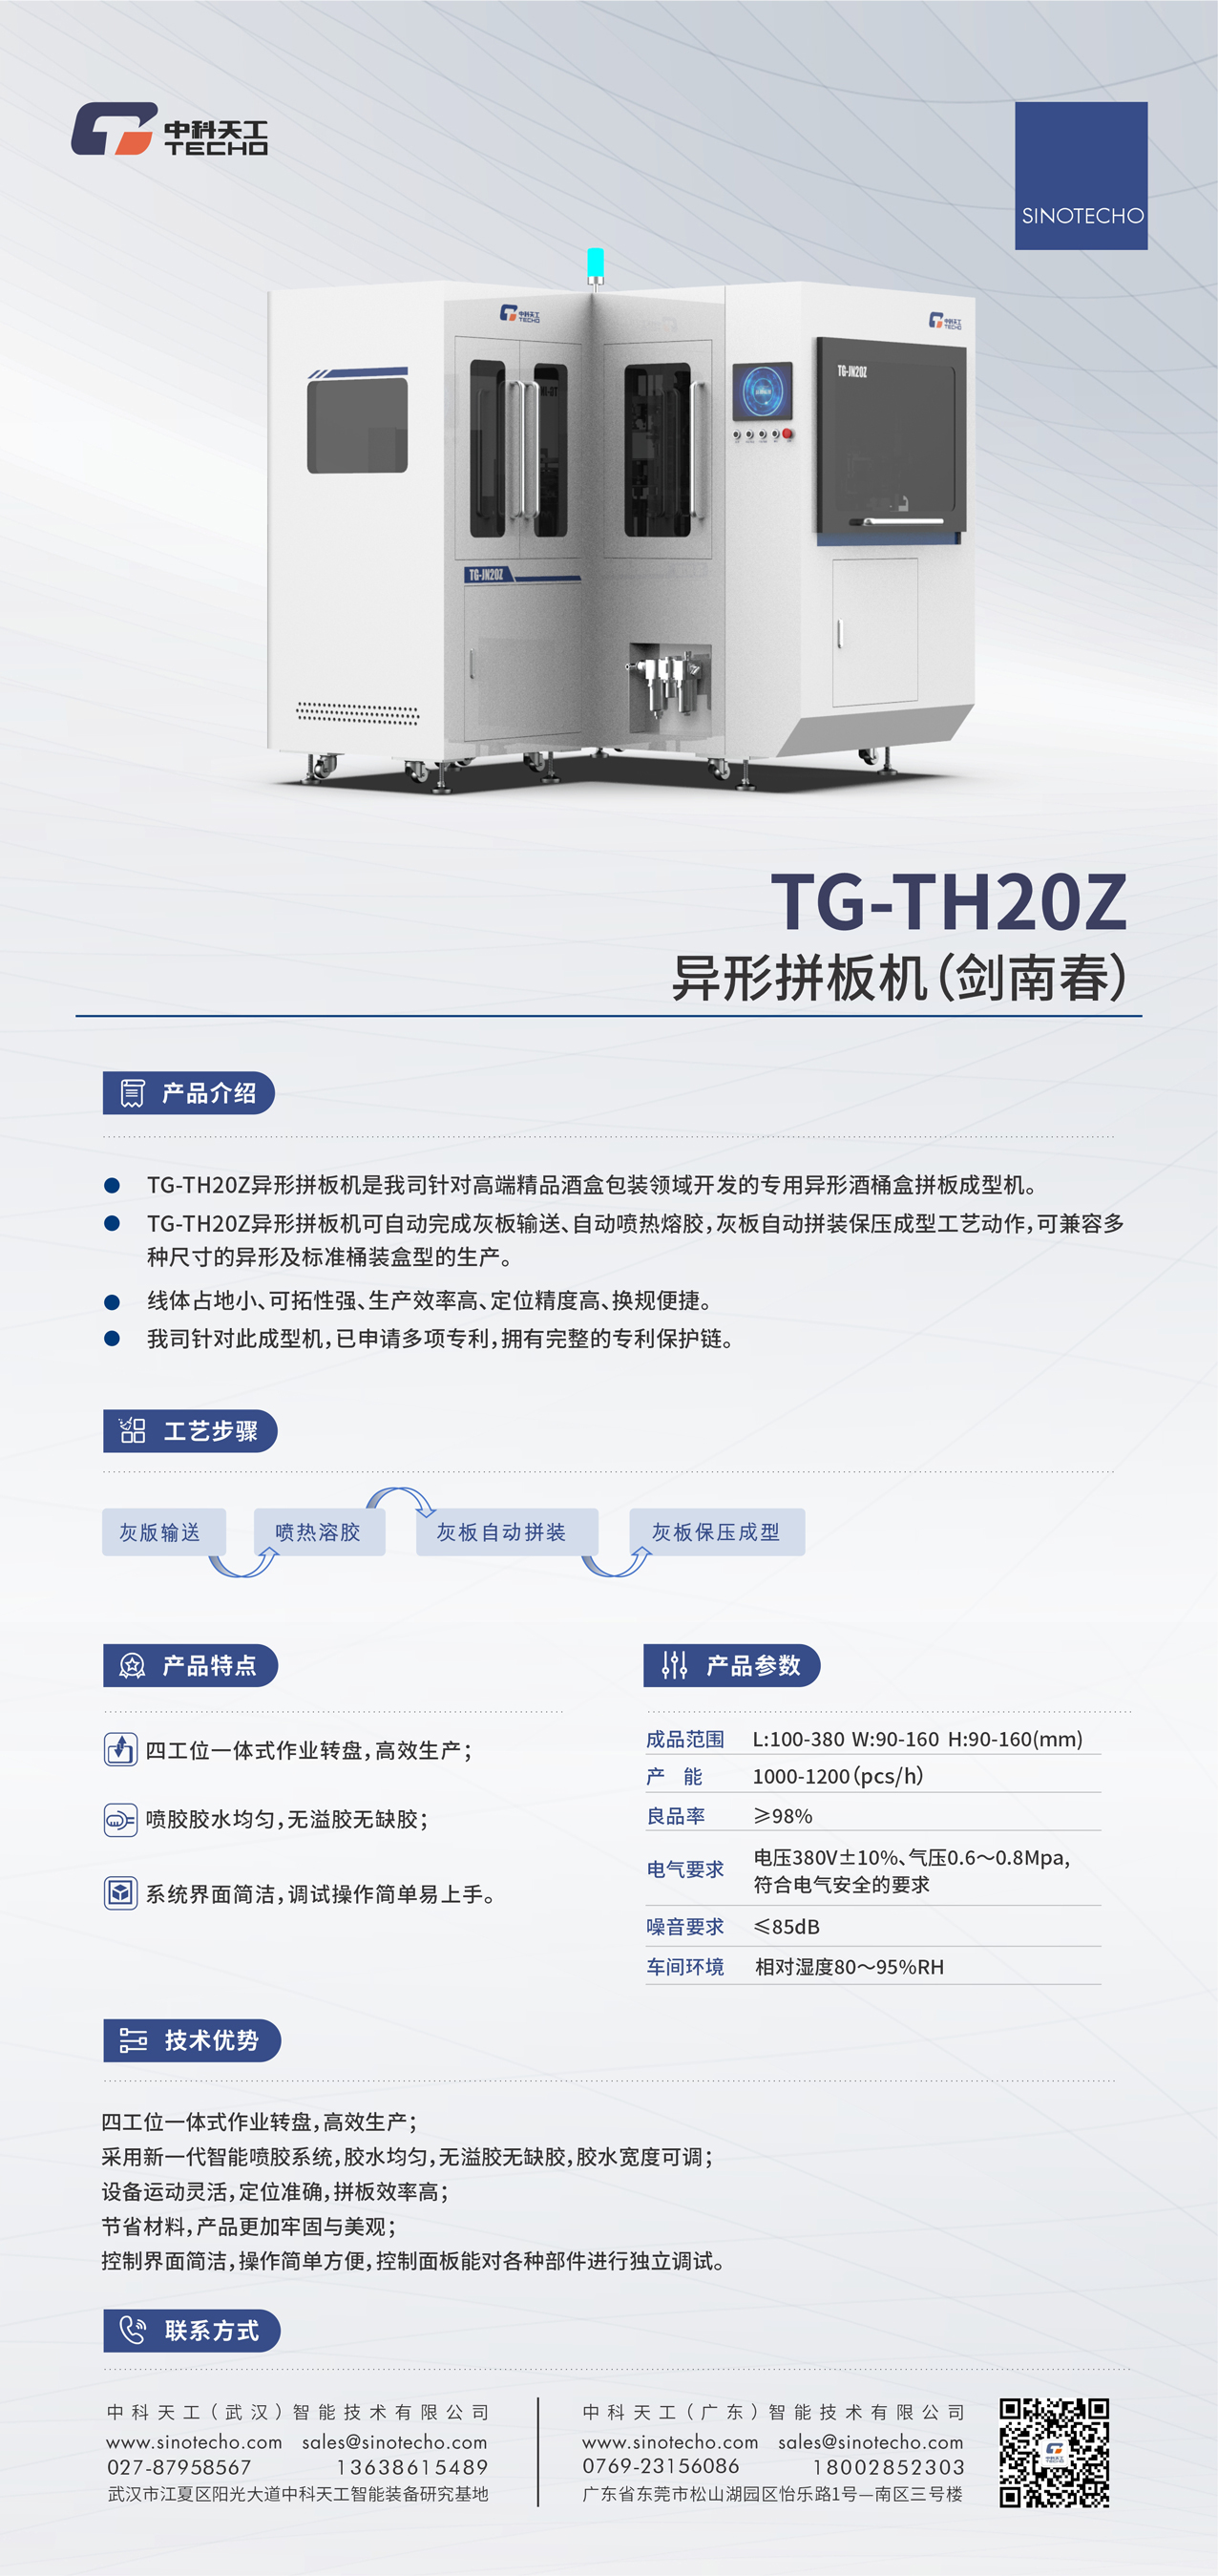 TG-TH20Z内页.jpg